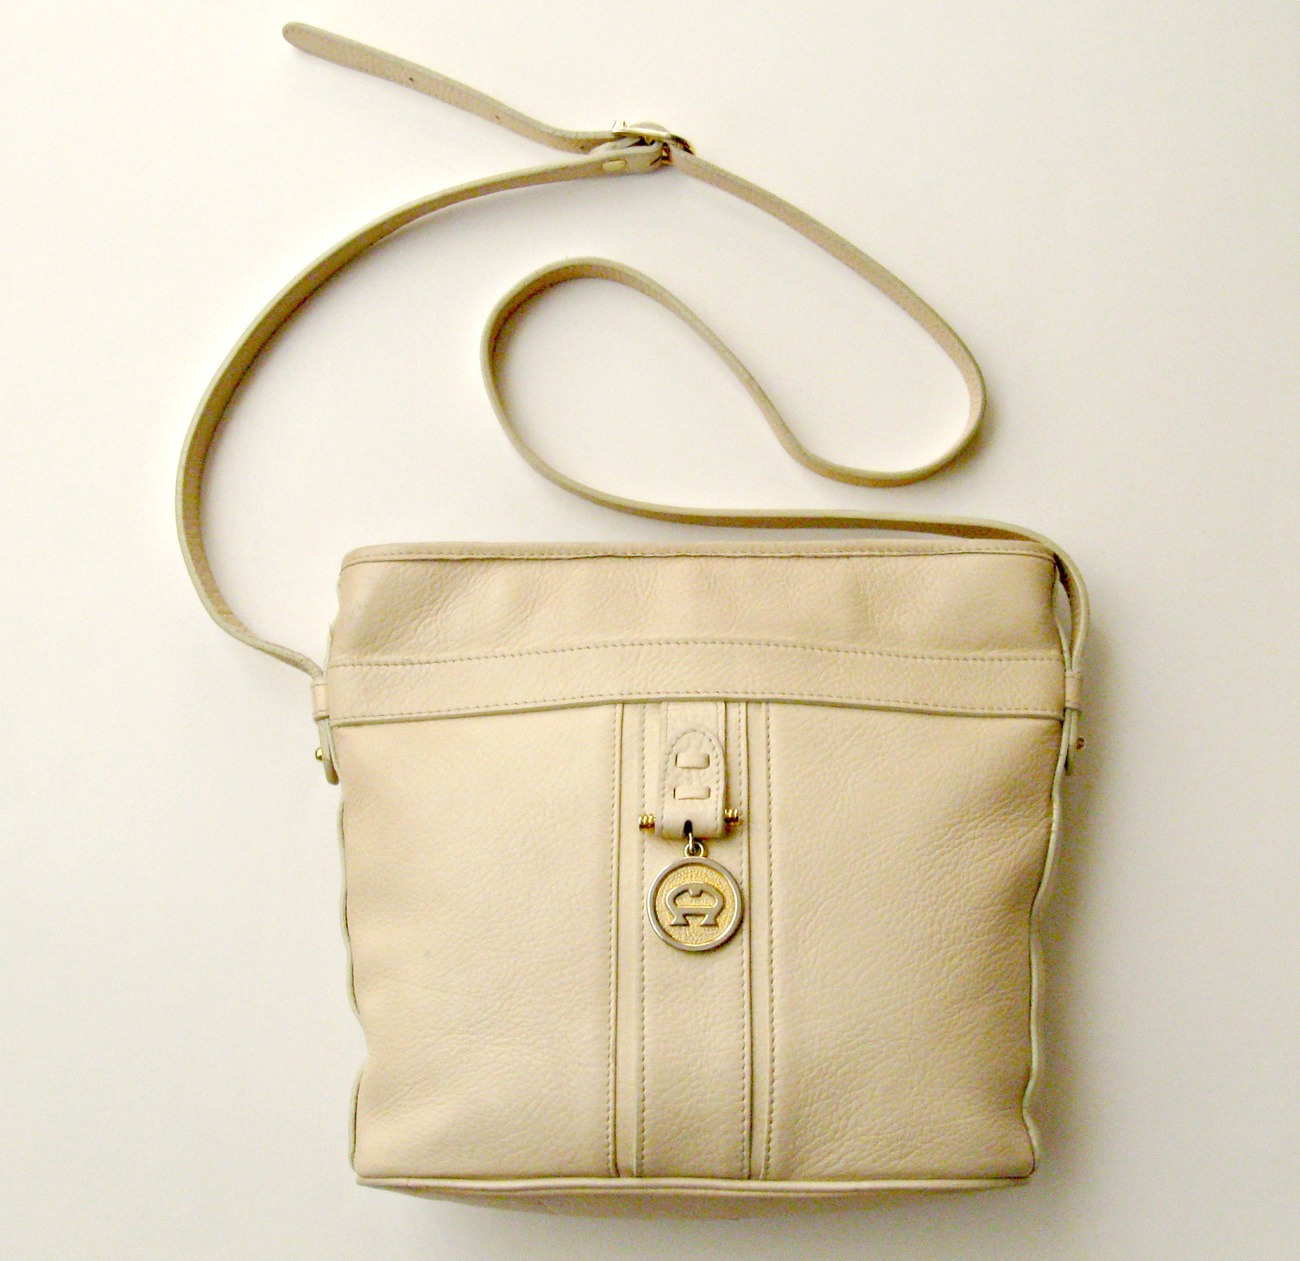 Vintage Aigner cream colored leather shoulder purse. Pockets, zipper ...